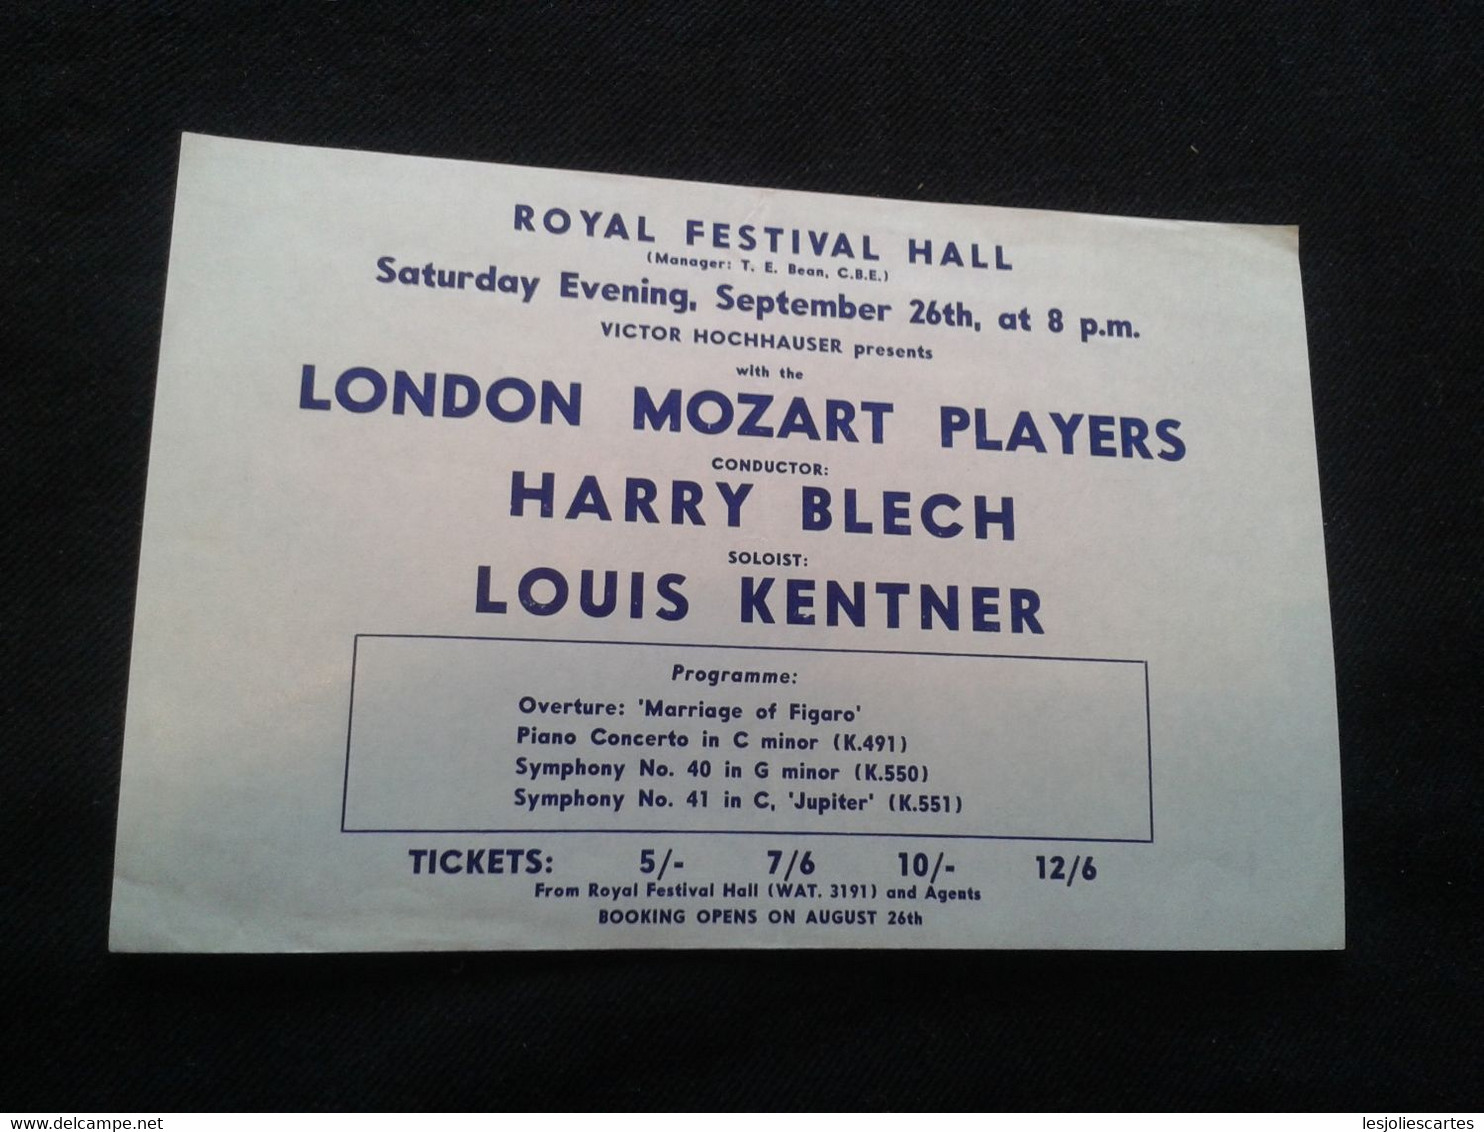 LOUIS KENTNER PIANIST PIANISTE KLAVIER PIANO HARRY BLECH CONDUCTOR DIRIGENT LONDON MOZART PLAYERS CONCERT FLYER HANDBILL - Programme